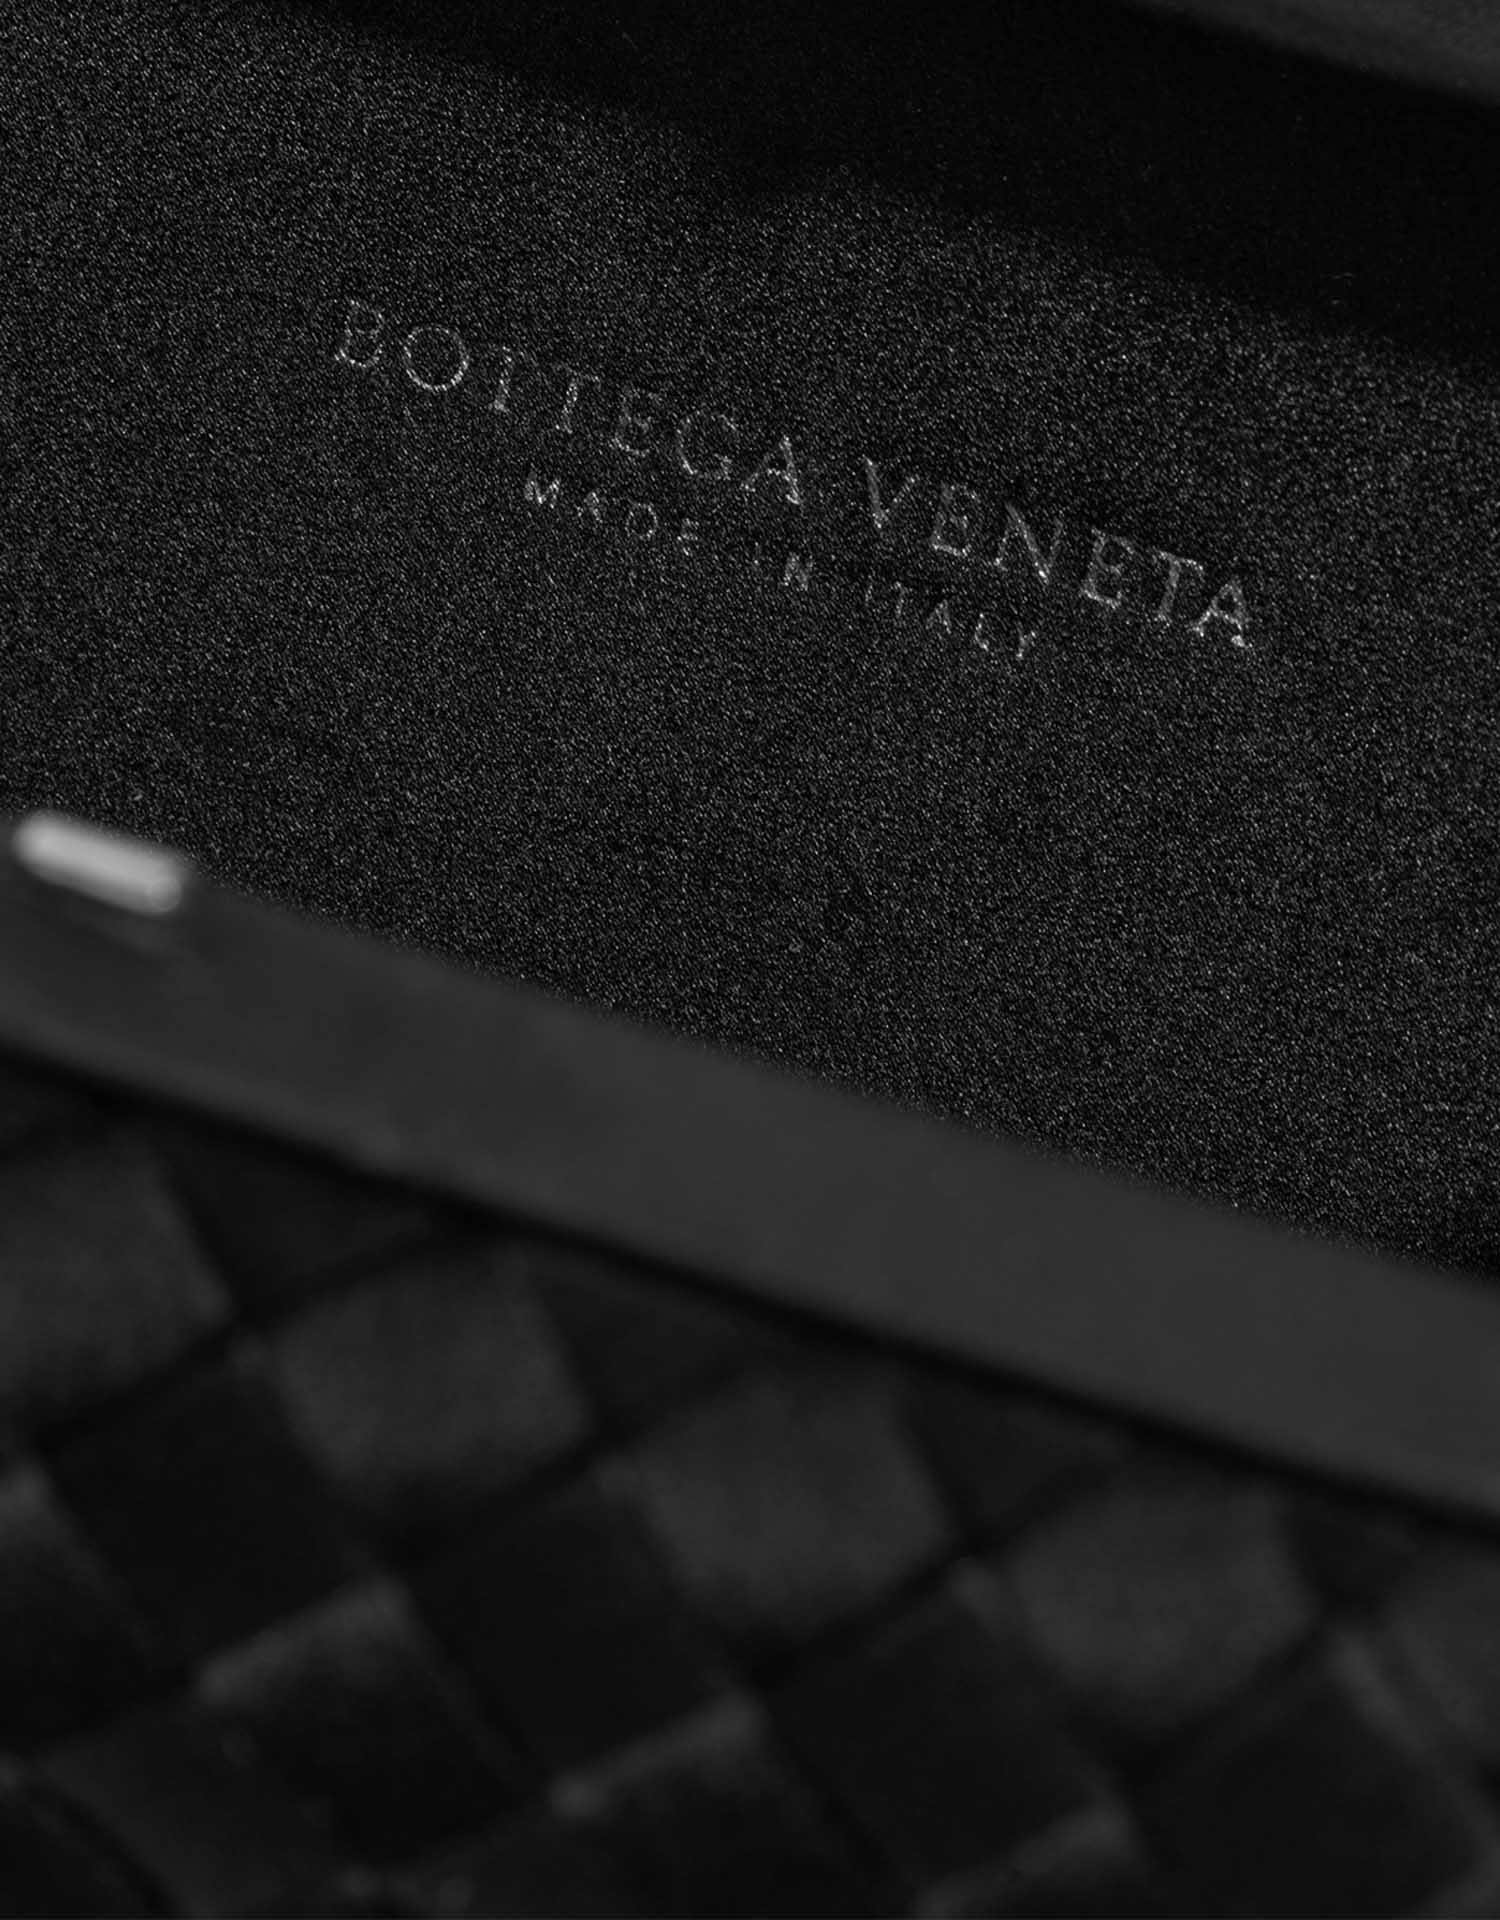 Pre-owned Bottega Veneta bag Knot Chain Clutch Satin Black Black Logo | Sell your designer bag on Saclab.com